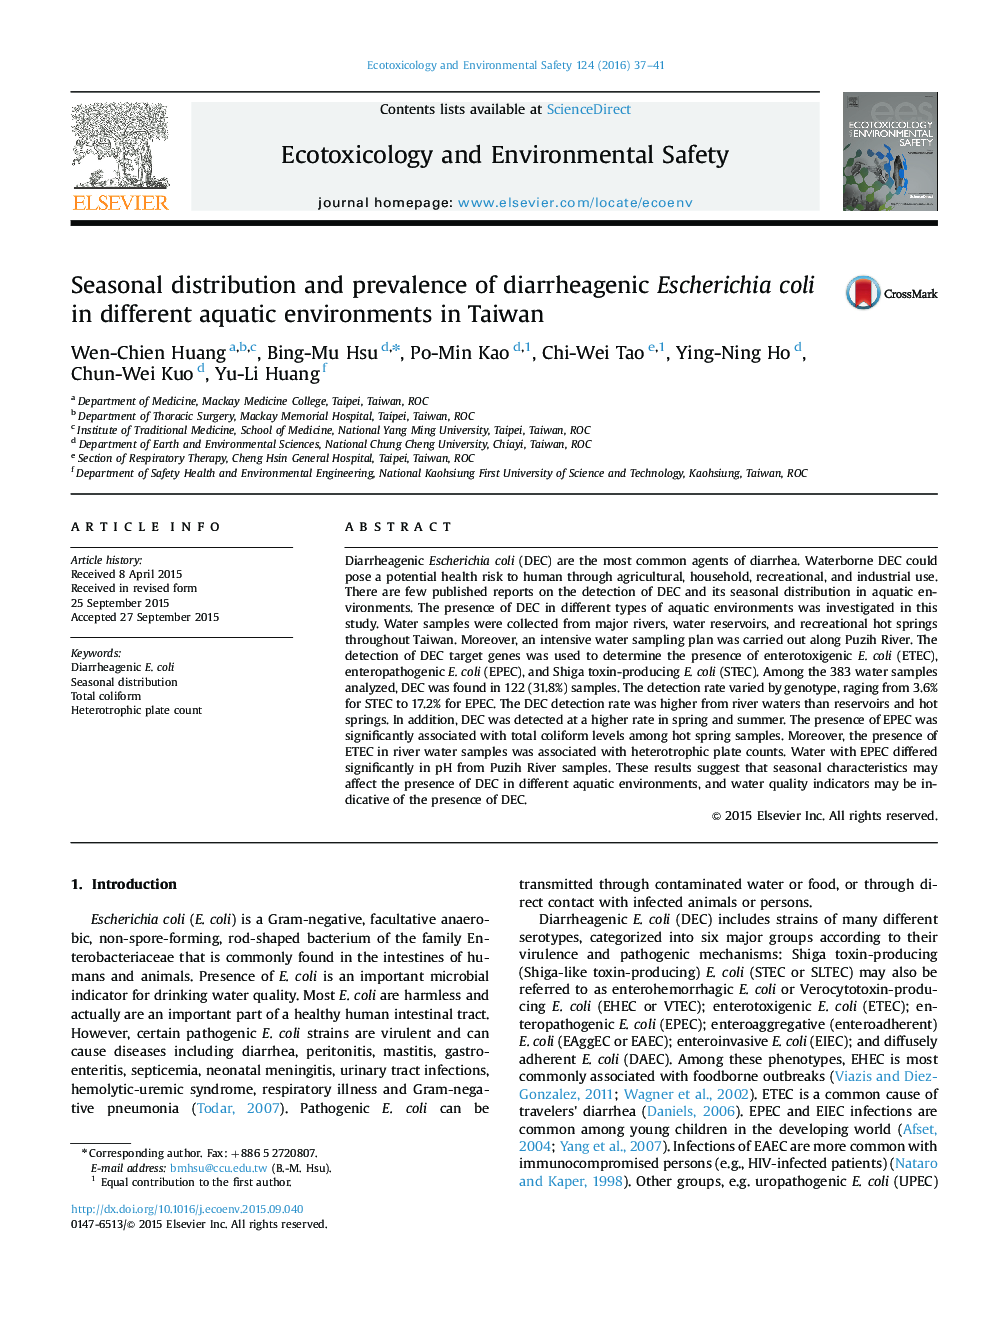 Seasonal distribution and prevalence of diarrheagenic Escherichia coli in different aquatic environments in Taiwan